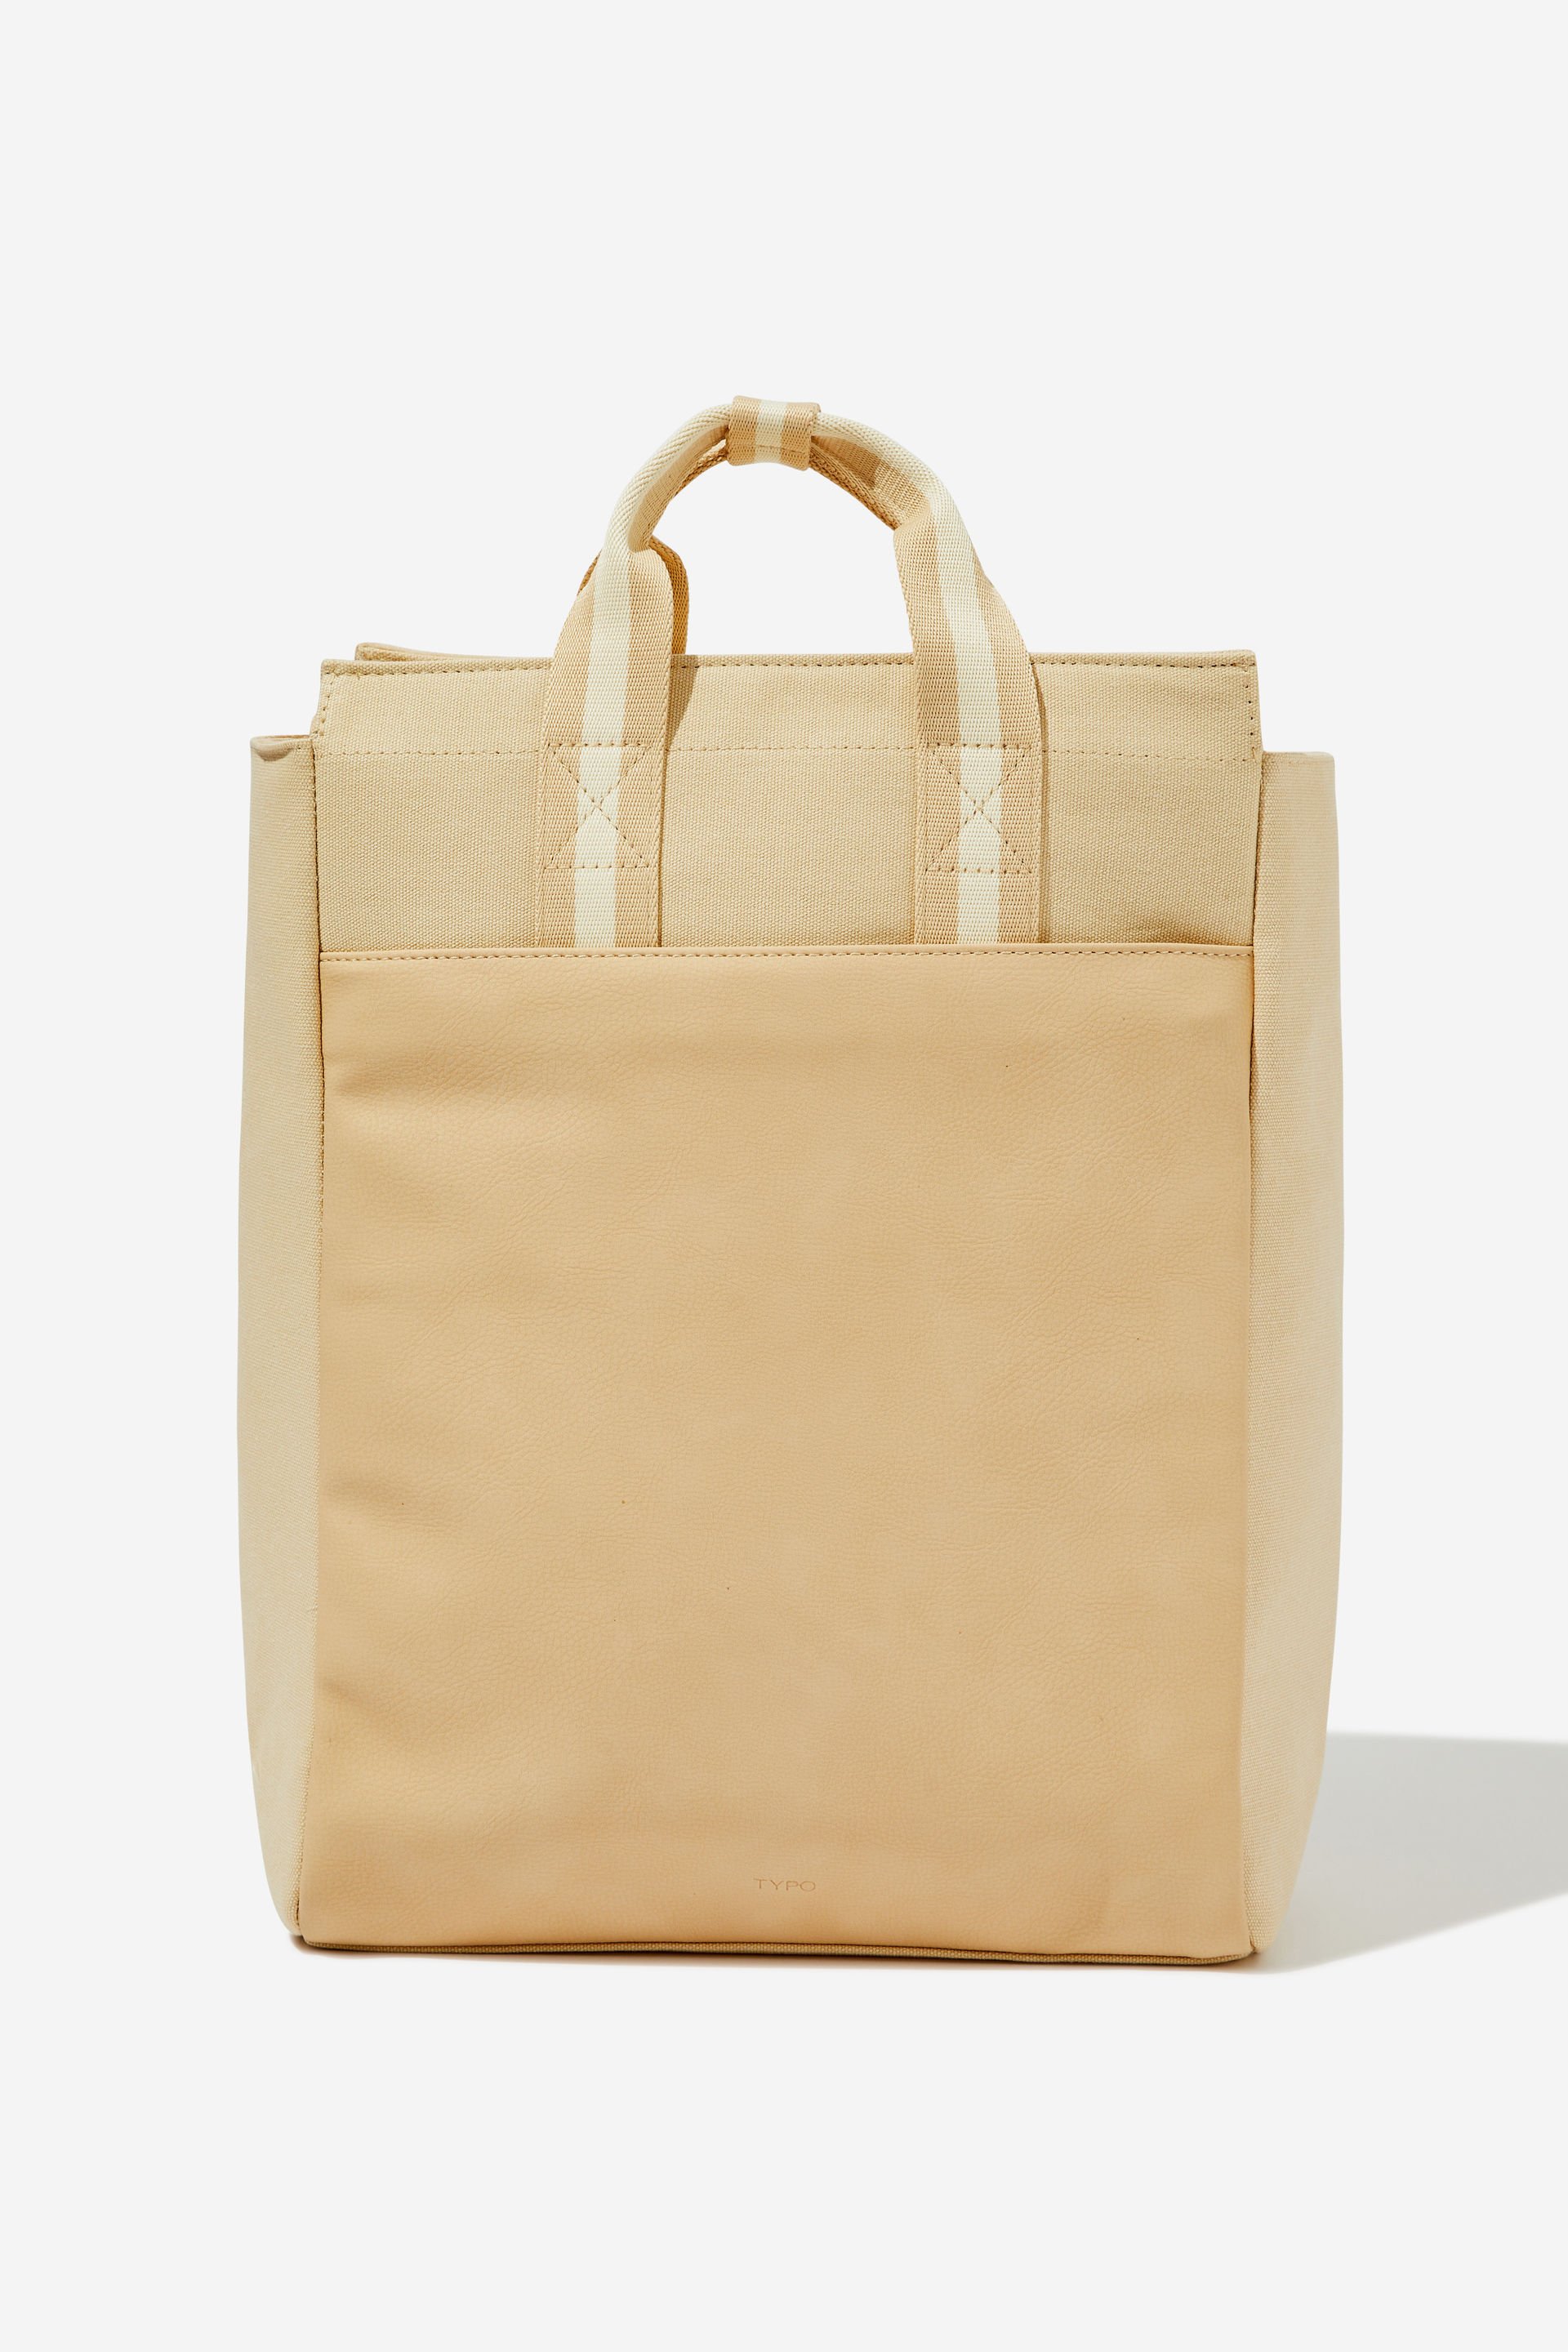 Typo - Essential Tote Backpack - Latte